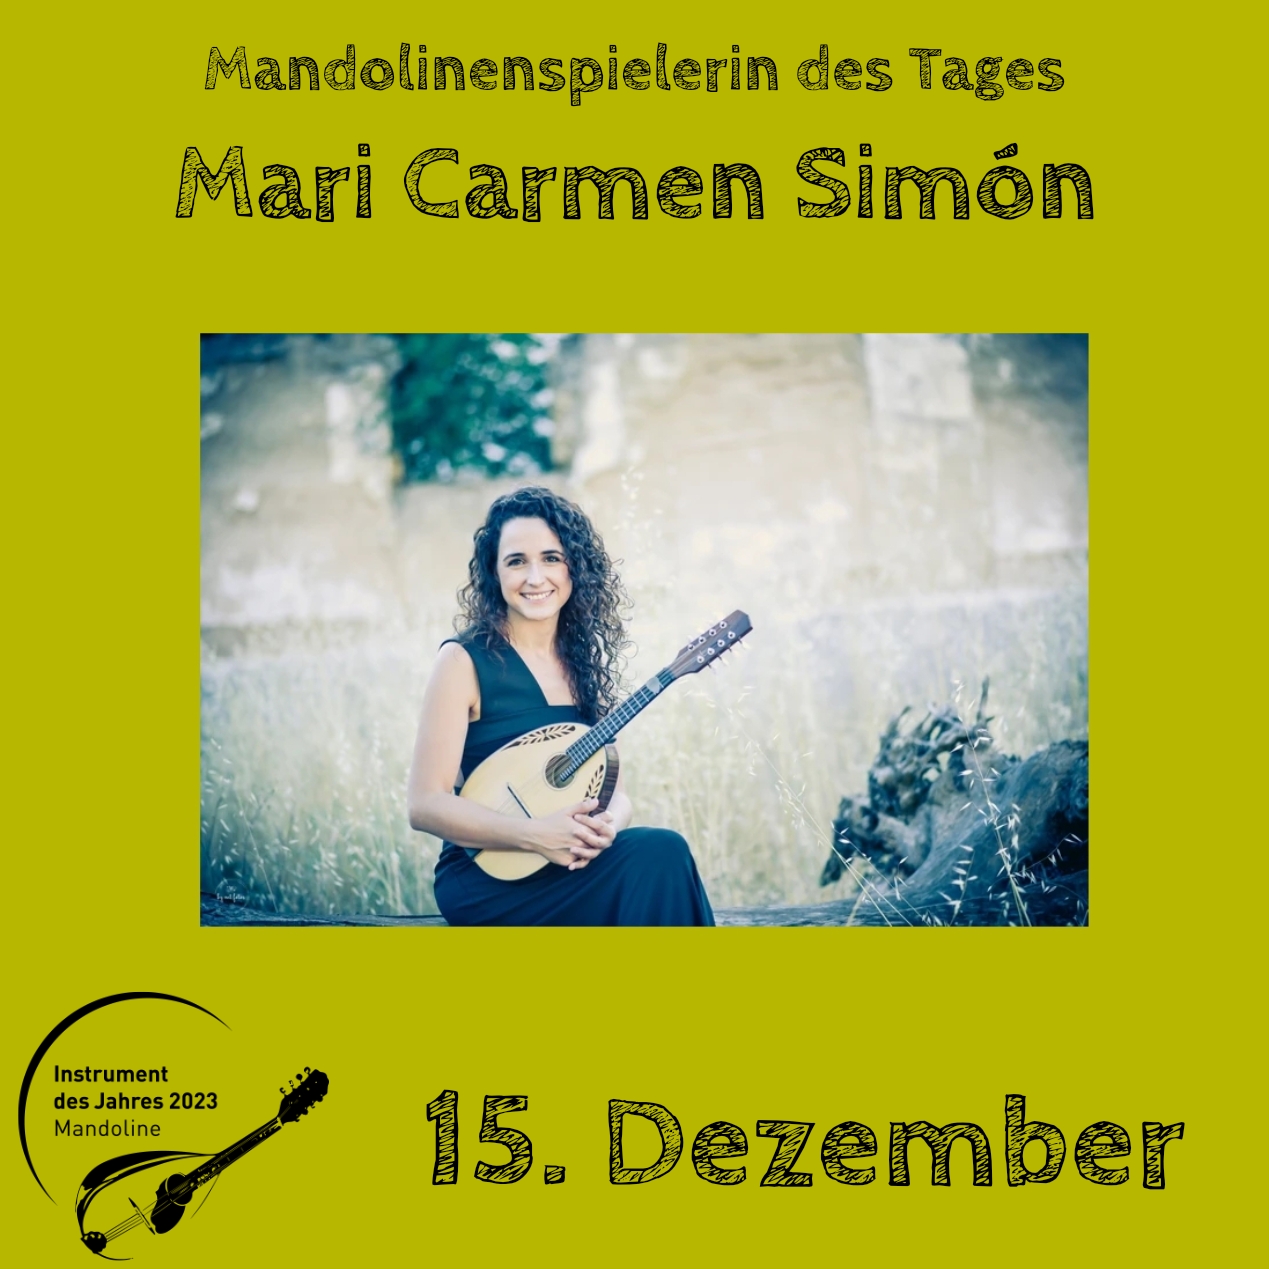 15. Dezember - Mari Carmen Simón Instrument des Jahres 2023 Mandolinenspieler Mandolinenspielerin des Tages